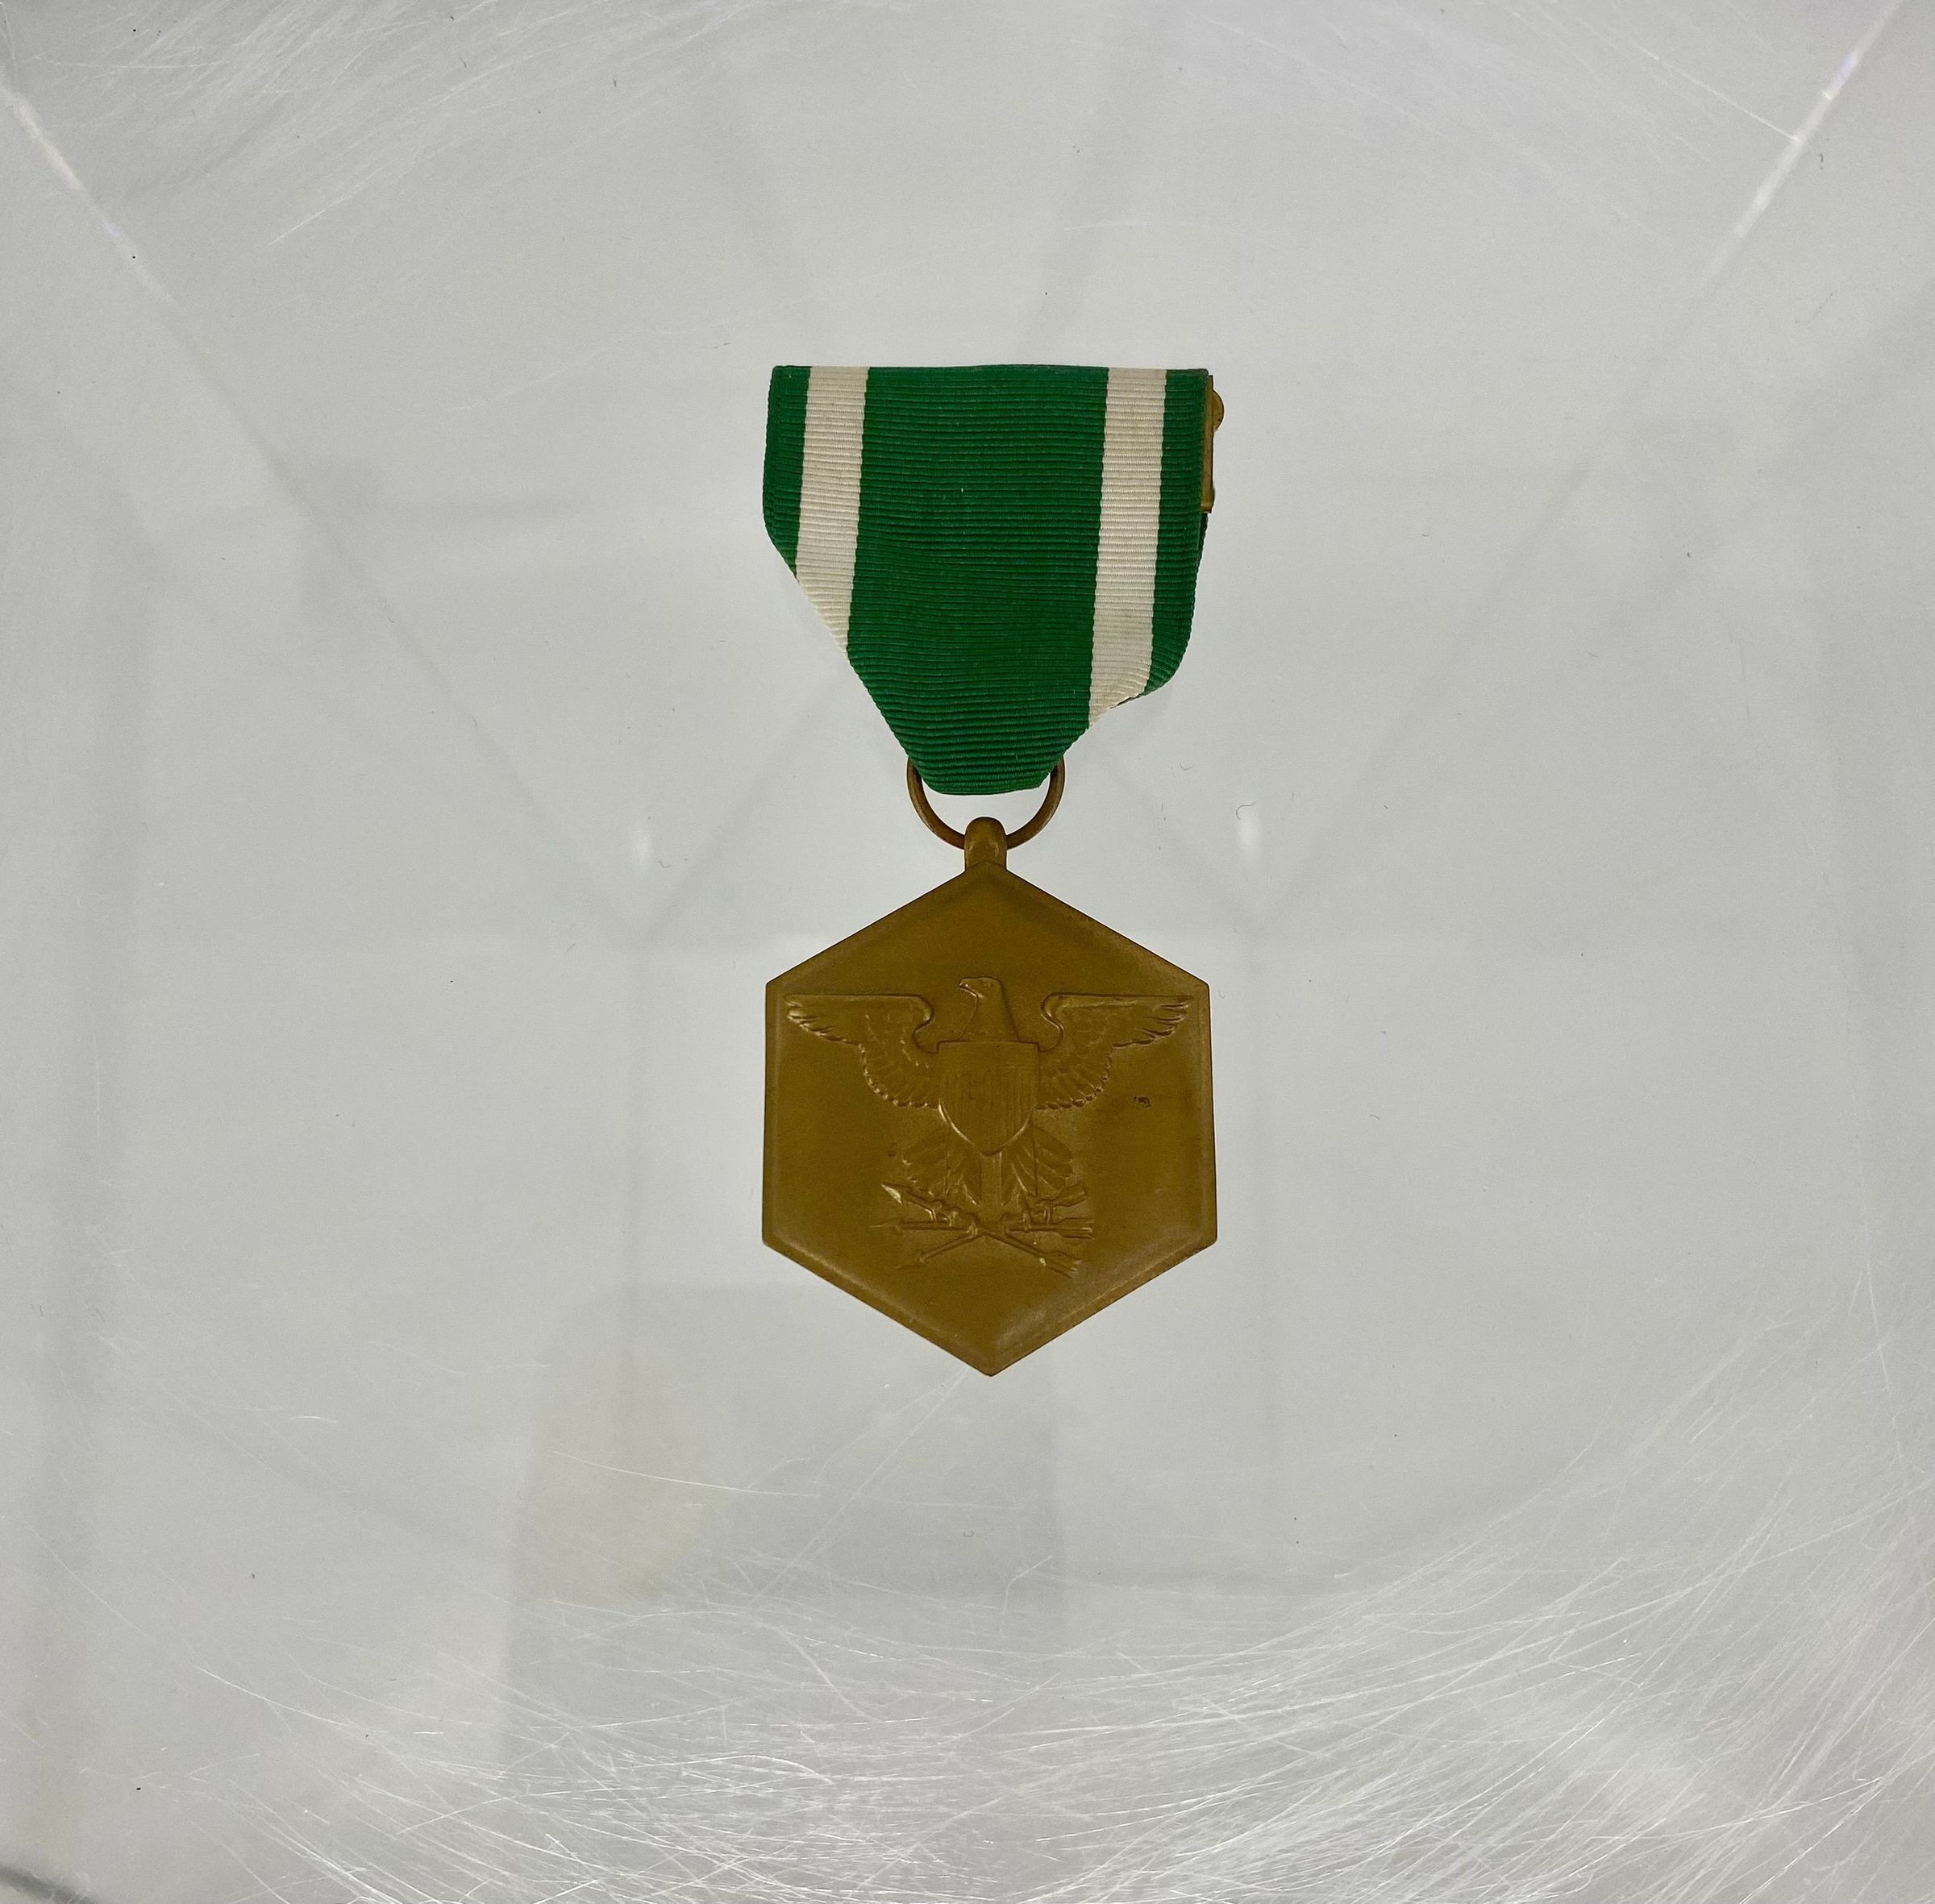 Primary Image of Navy Commendation Medal of James H. Flatley, Jr.